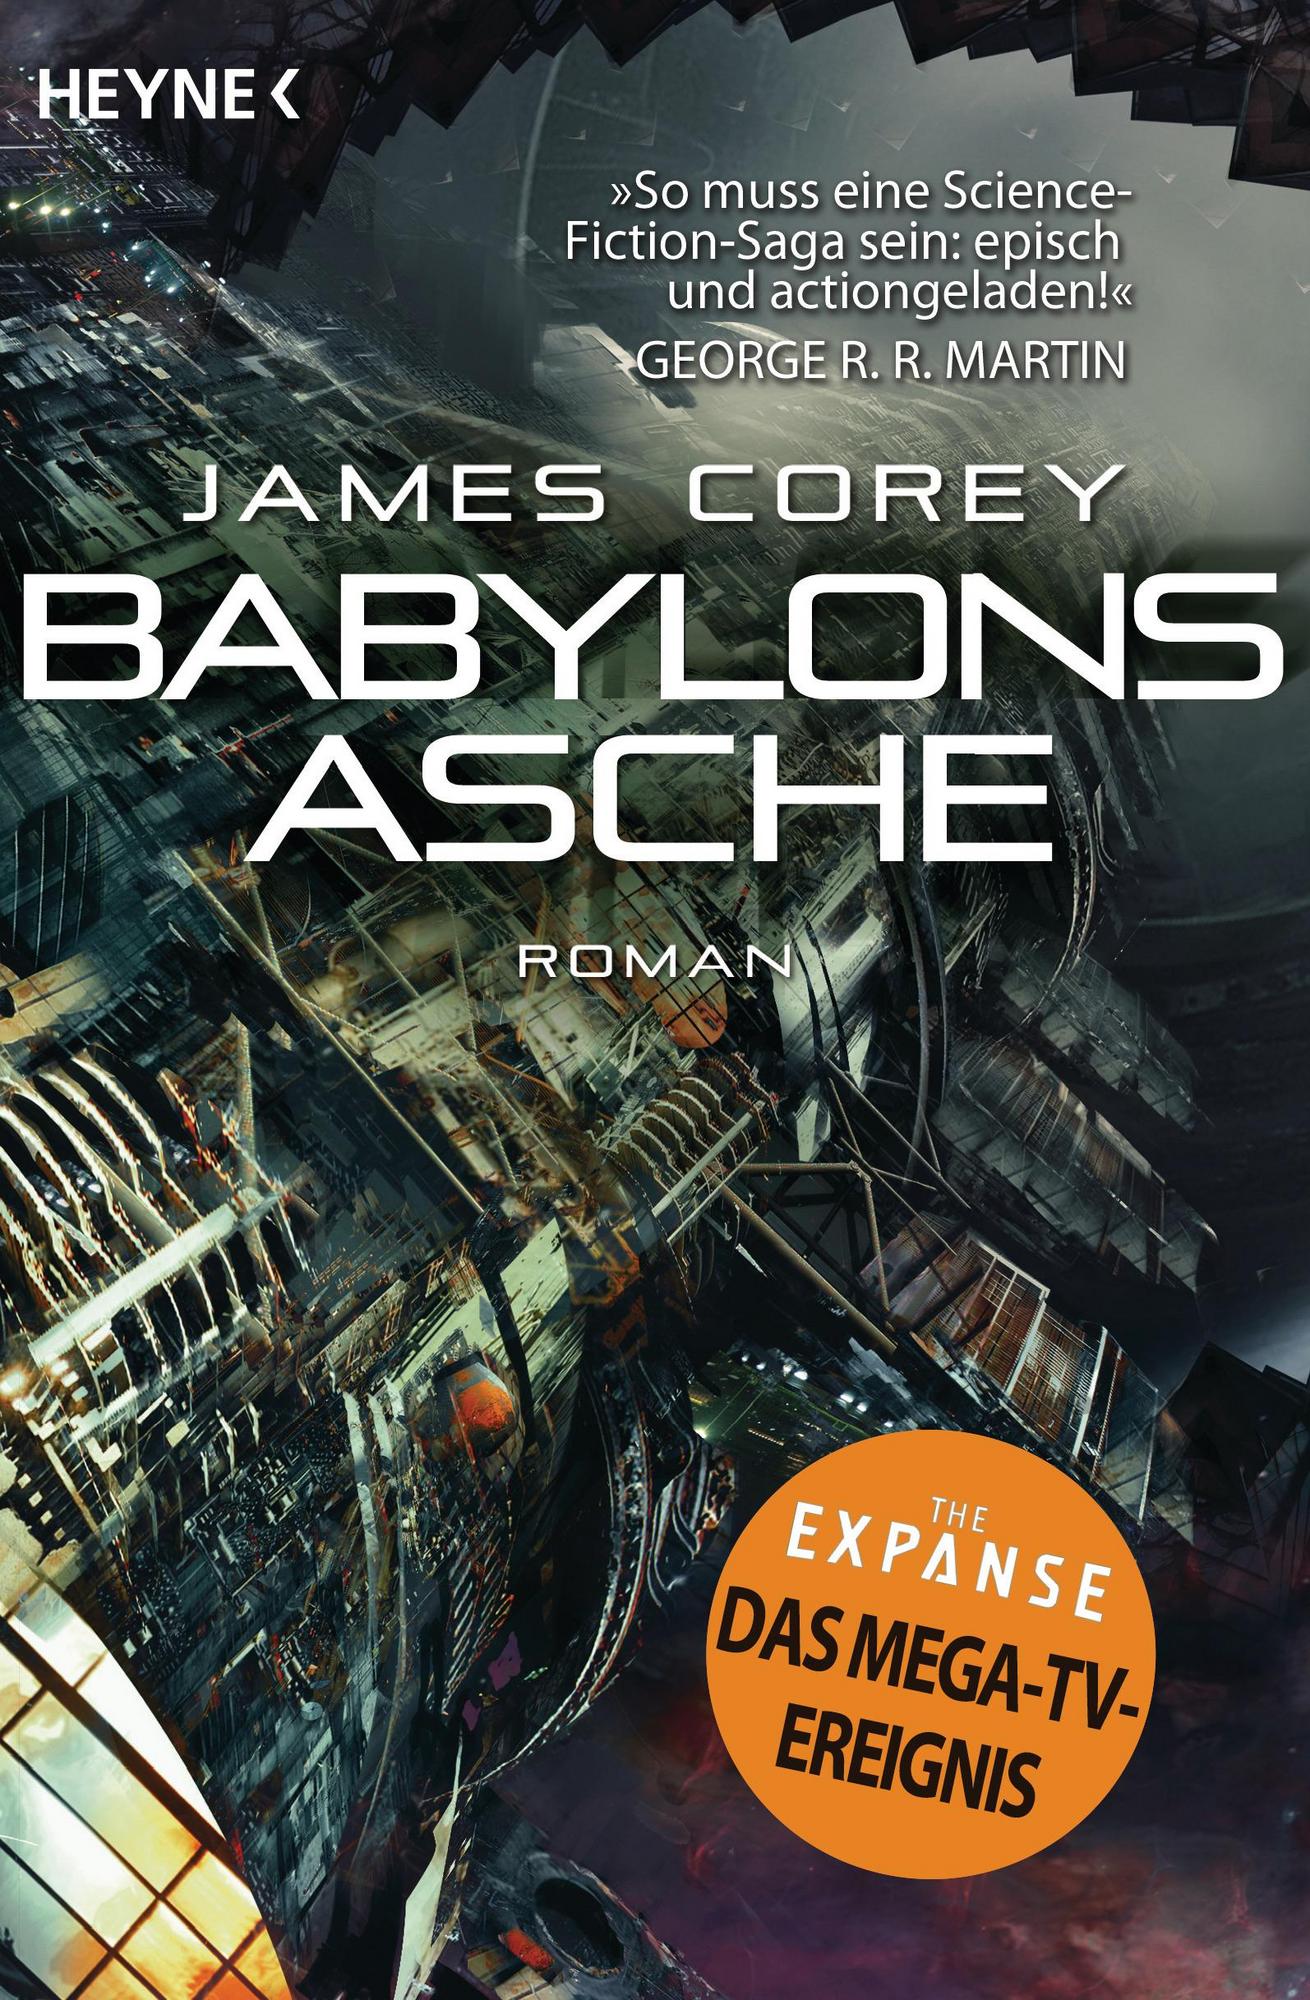 James S. A. Corey: Babylons Asche (EBook, German language)